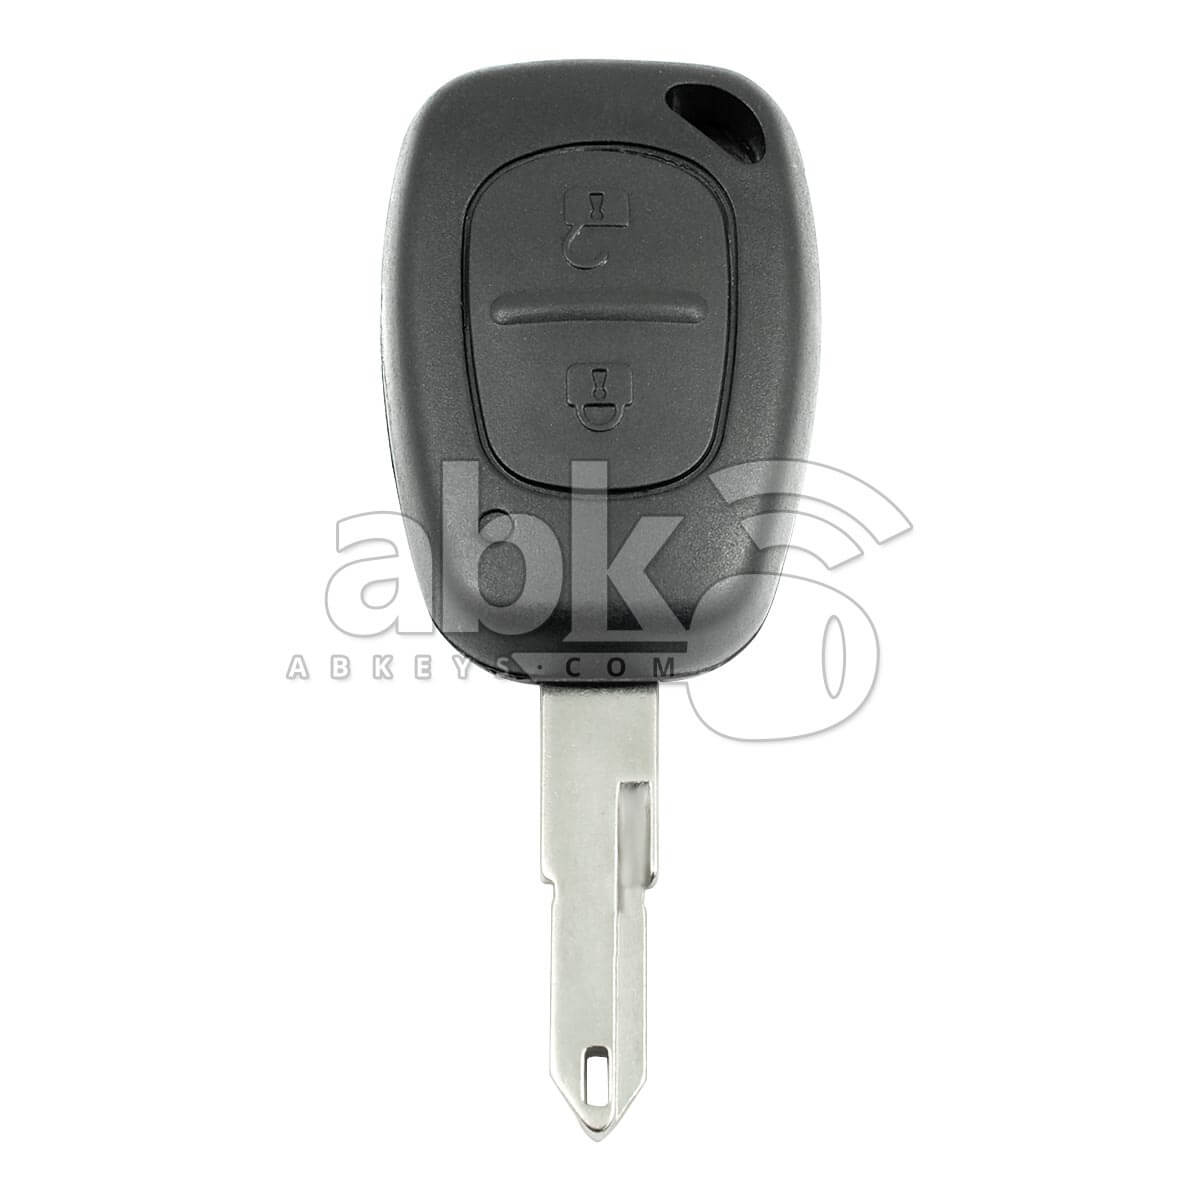 KASturbo 7701208408 Neiman Clio 3 Kangoo 2 Anti-Theft Steering Ignition  Lock with Key for Trafic Master Duster Sandero NV300 NV400 : :  Automotive